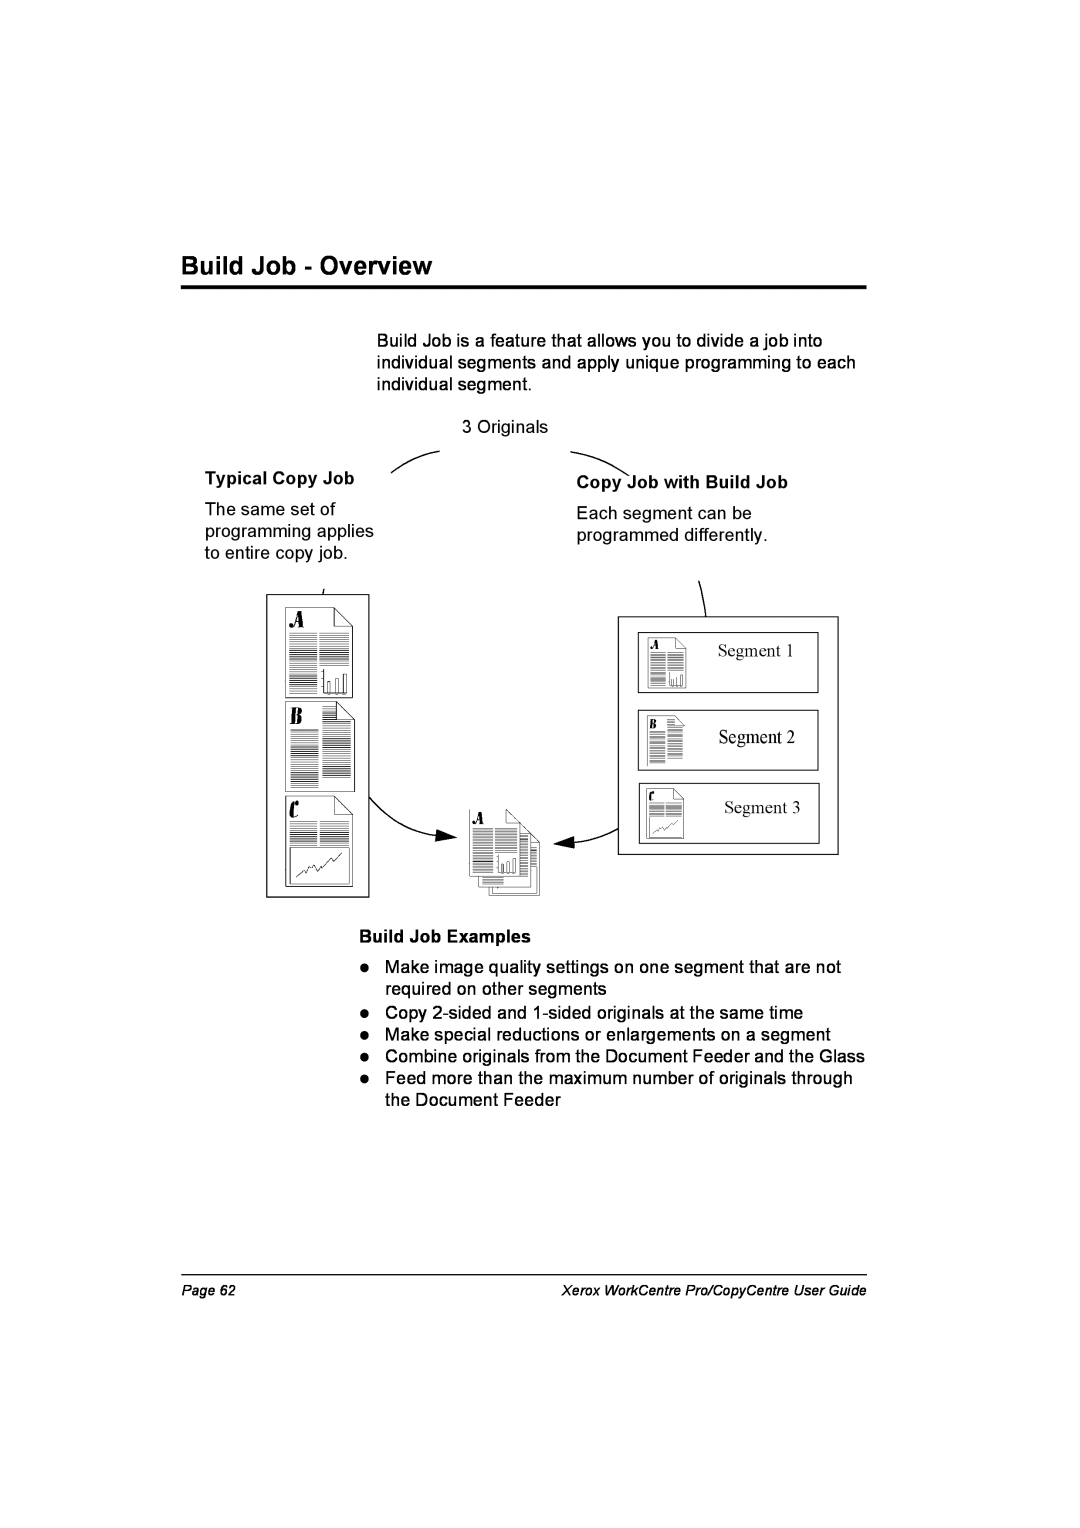 Xerox C65, C90, C75, WorkCentre Pro 75 manual Build Job - Overview, Segment 